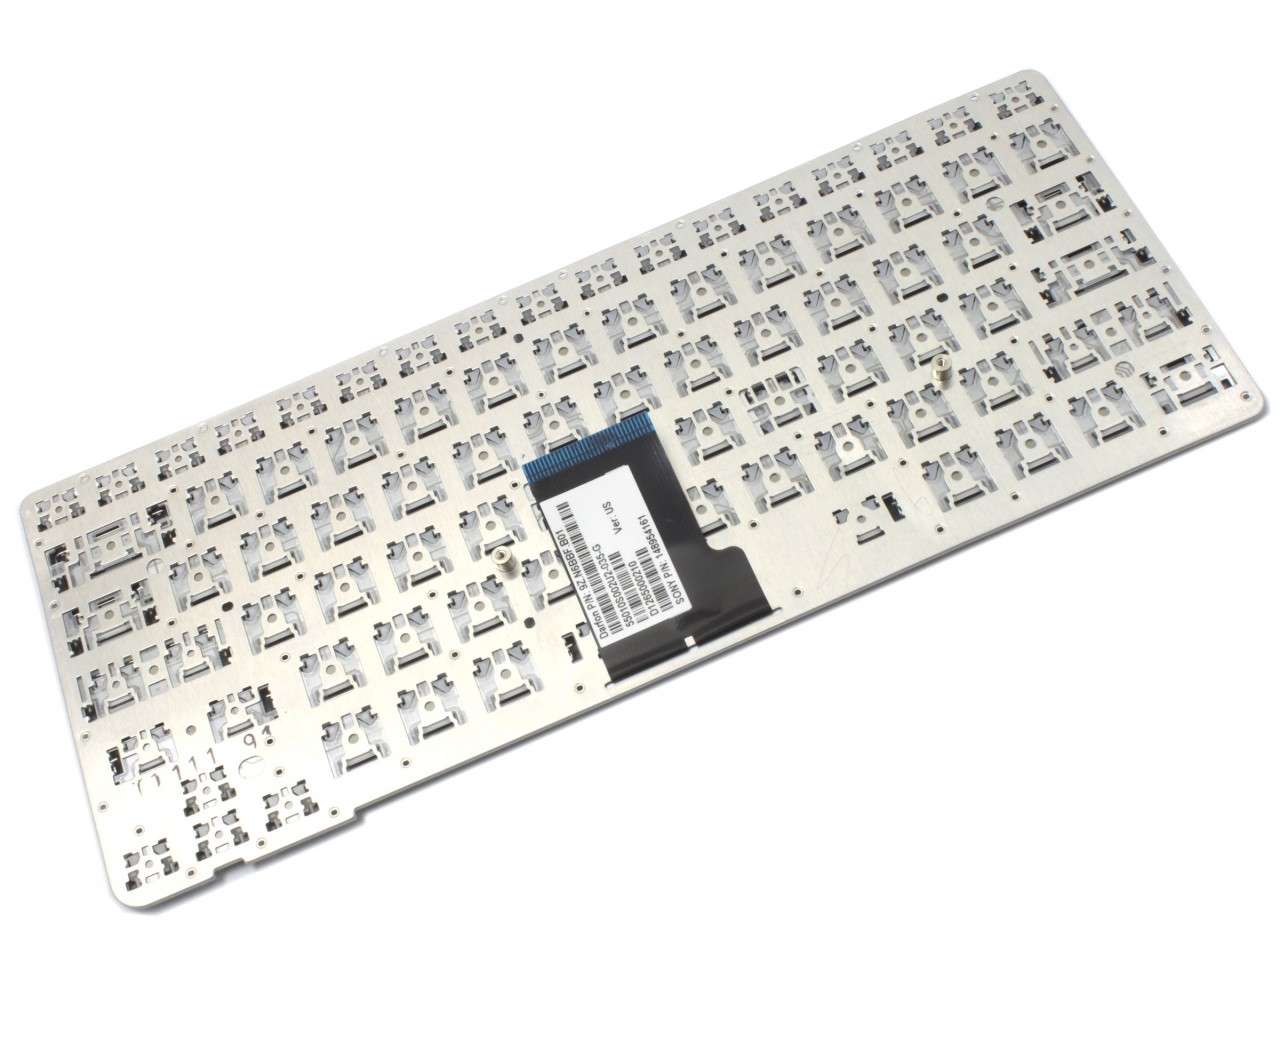 Tastatura argintie Sony Vaio VPCCA3s1e w layout US fara rama enter mic